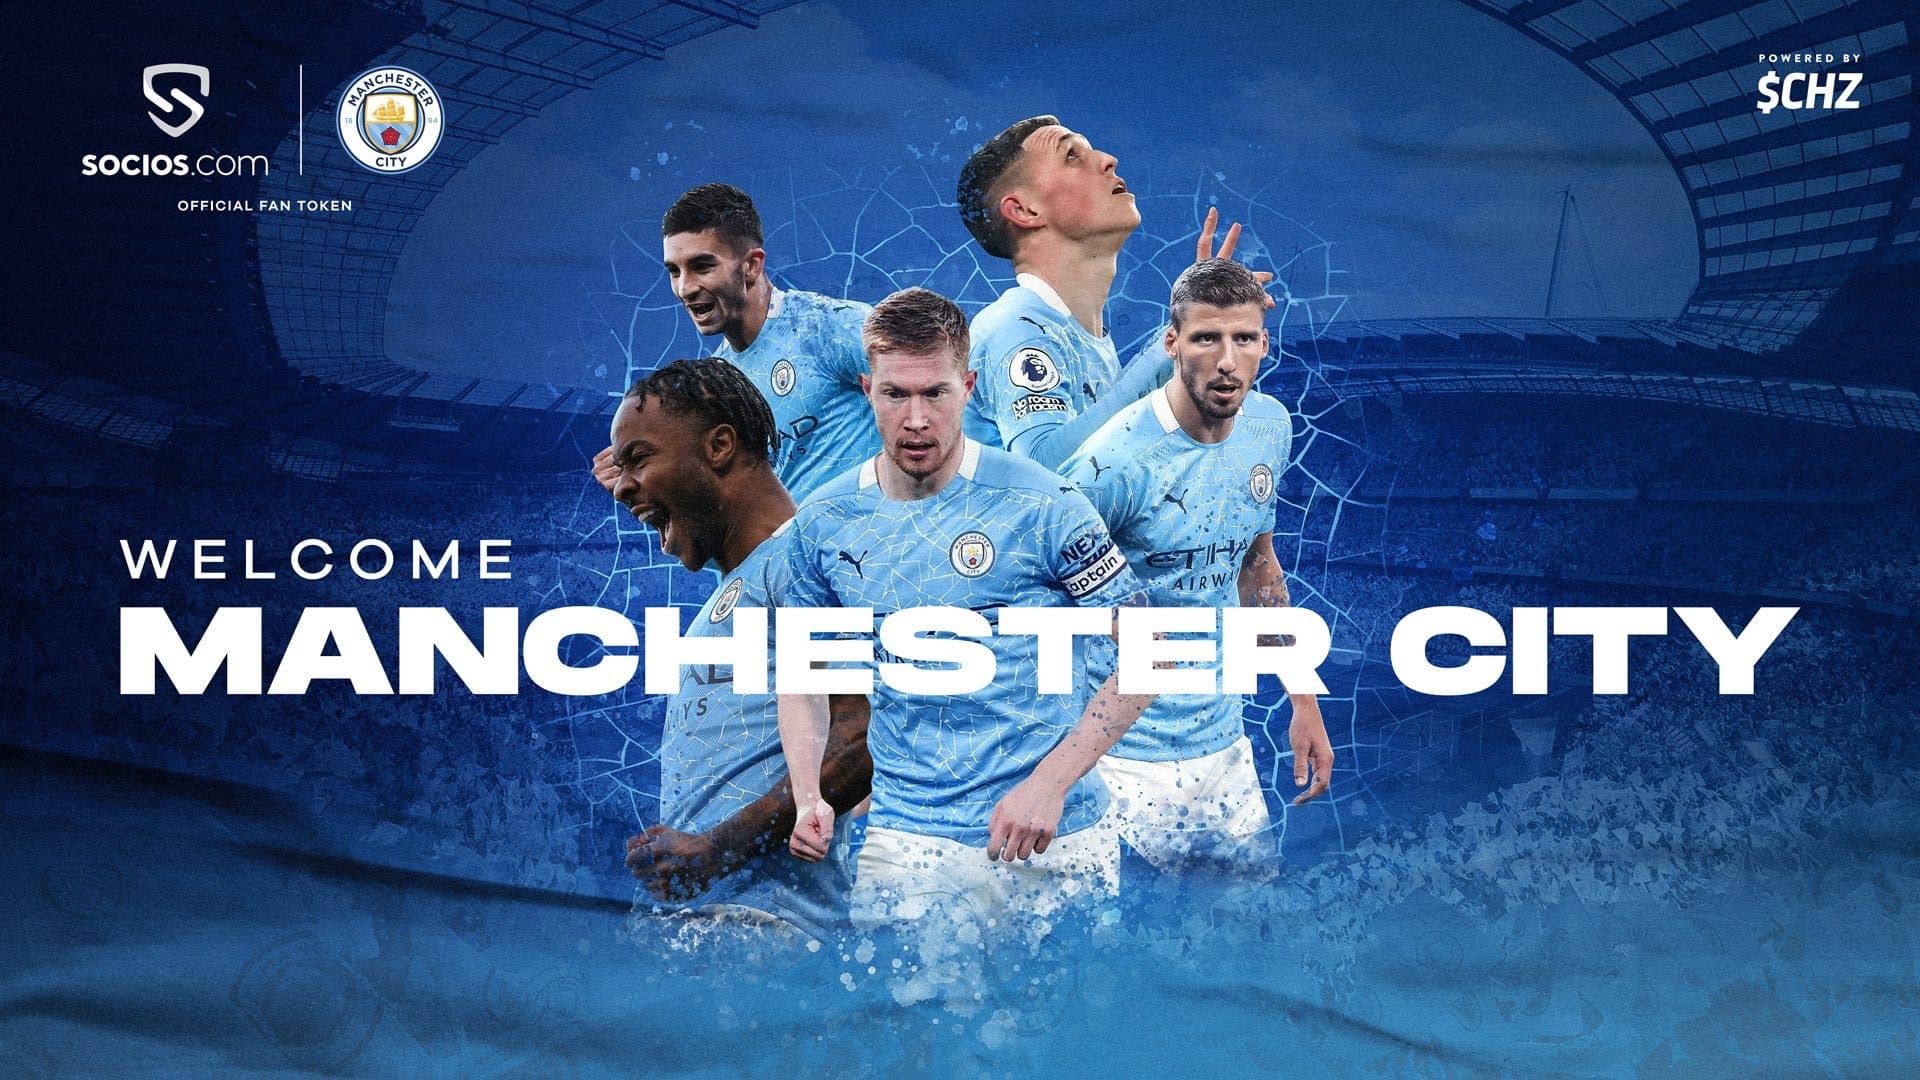 Manchester City lansira žeton oboževalcev na Socios.com